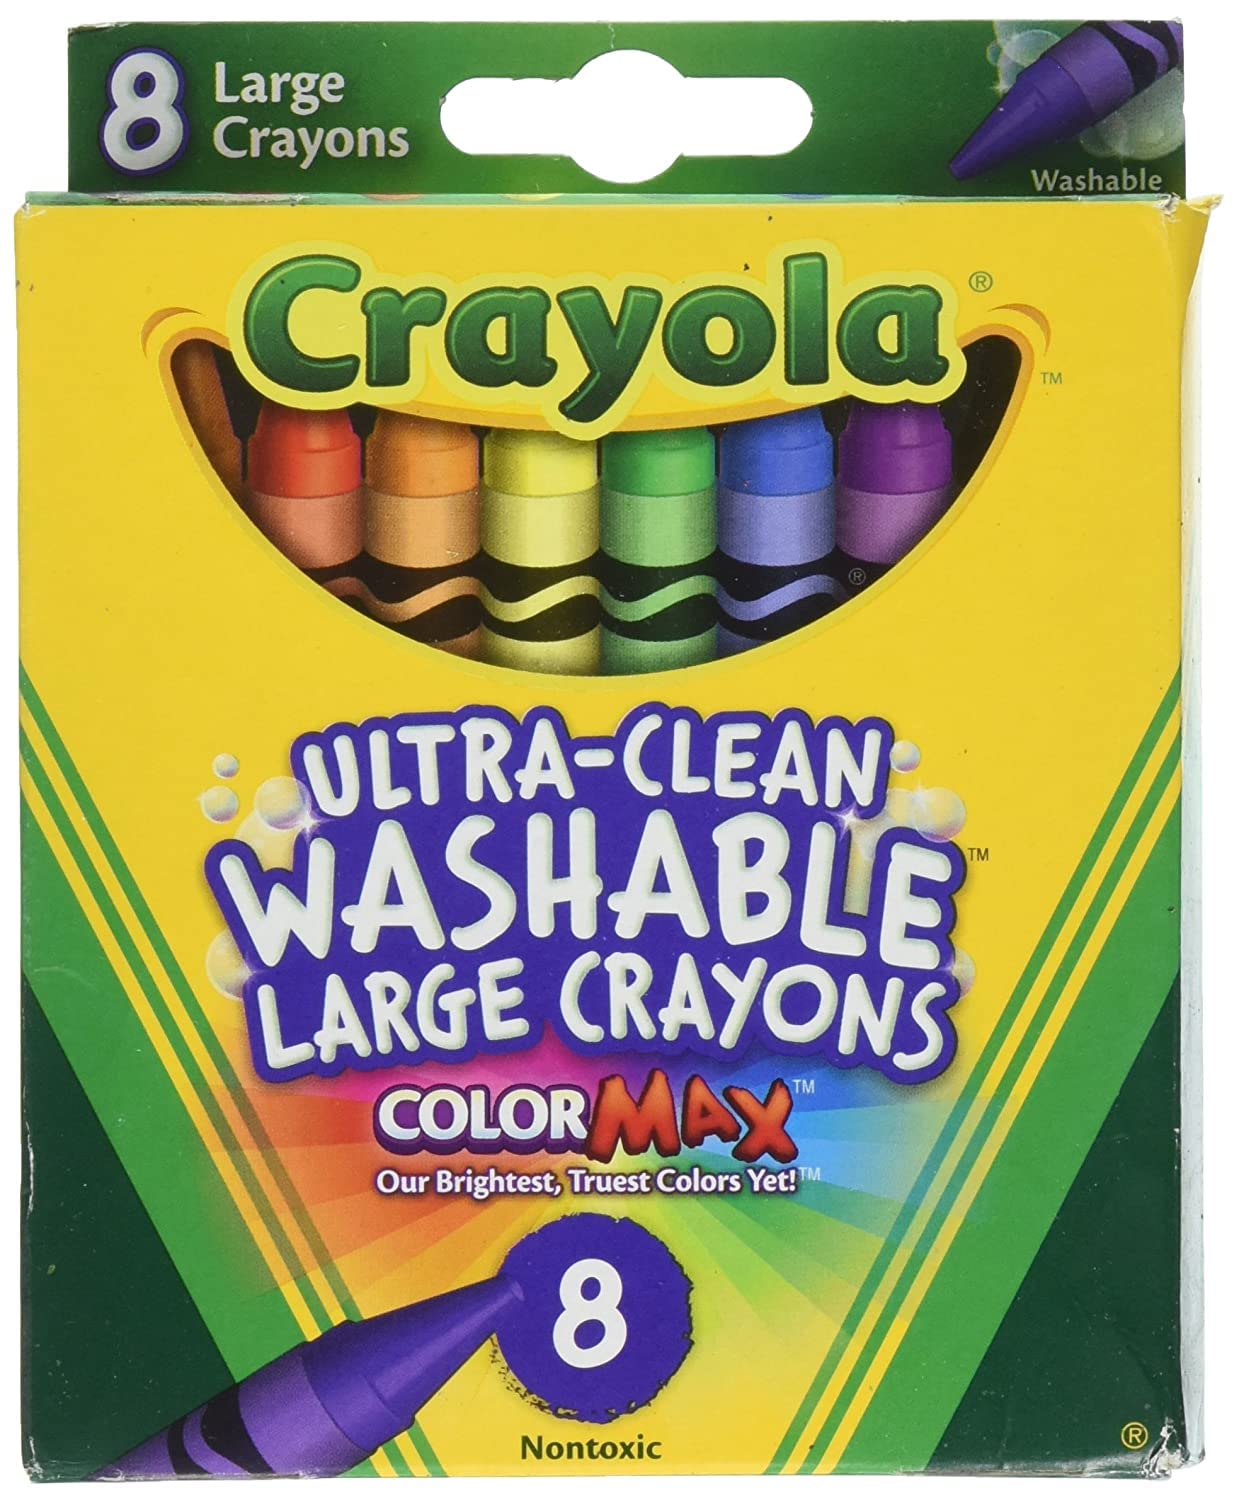 Crayola Washable Crayons, Large, 8 Colors - 2 Packs